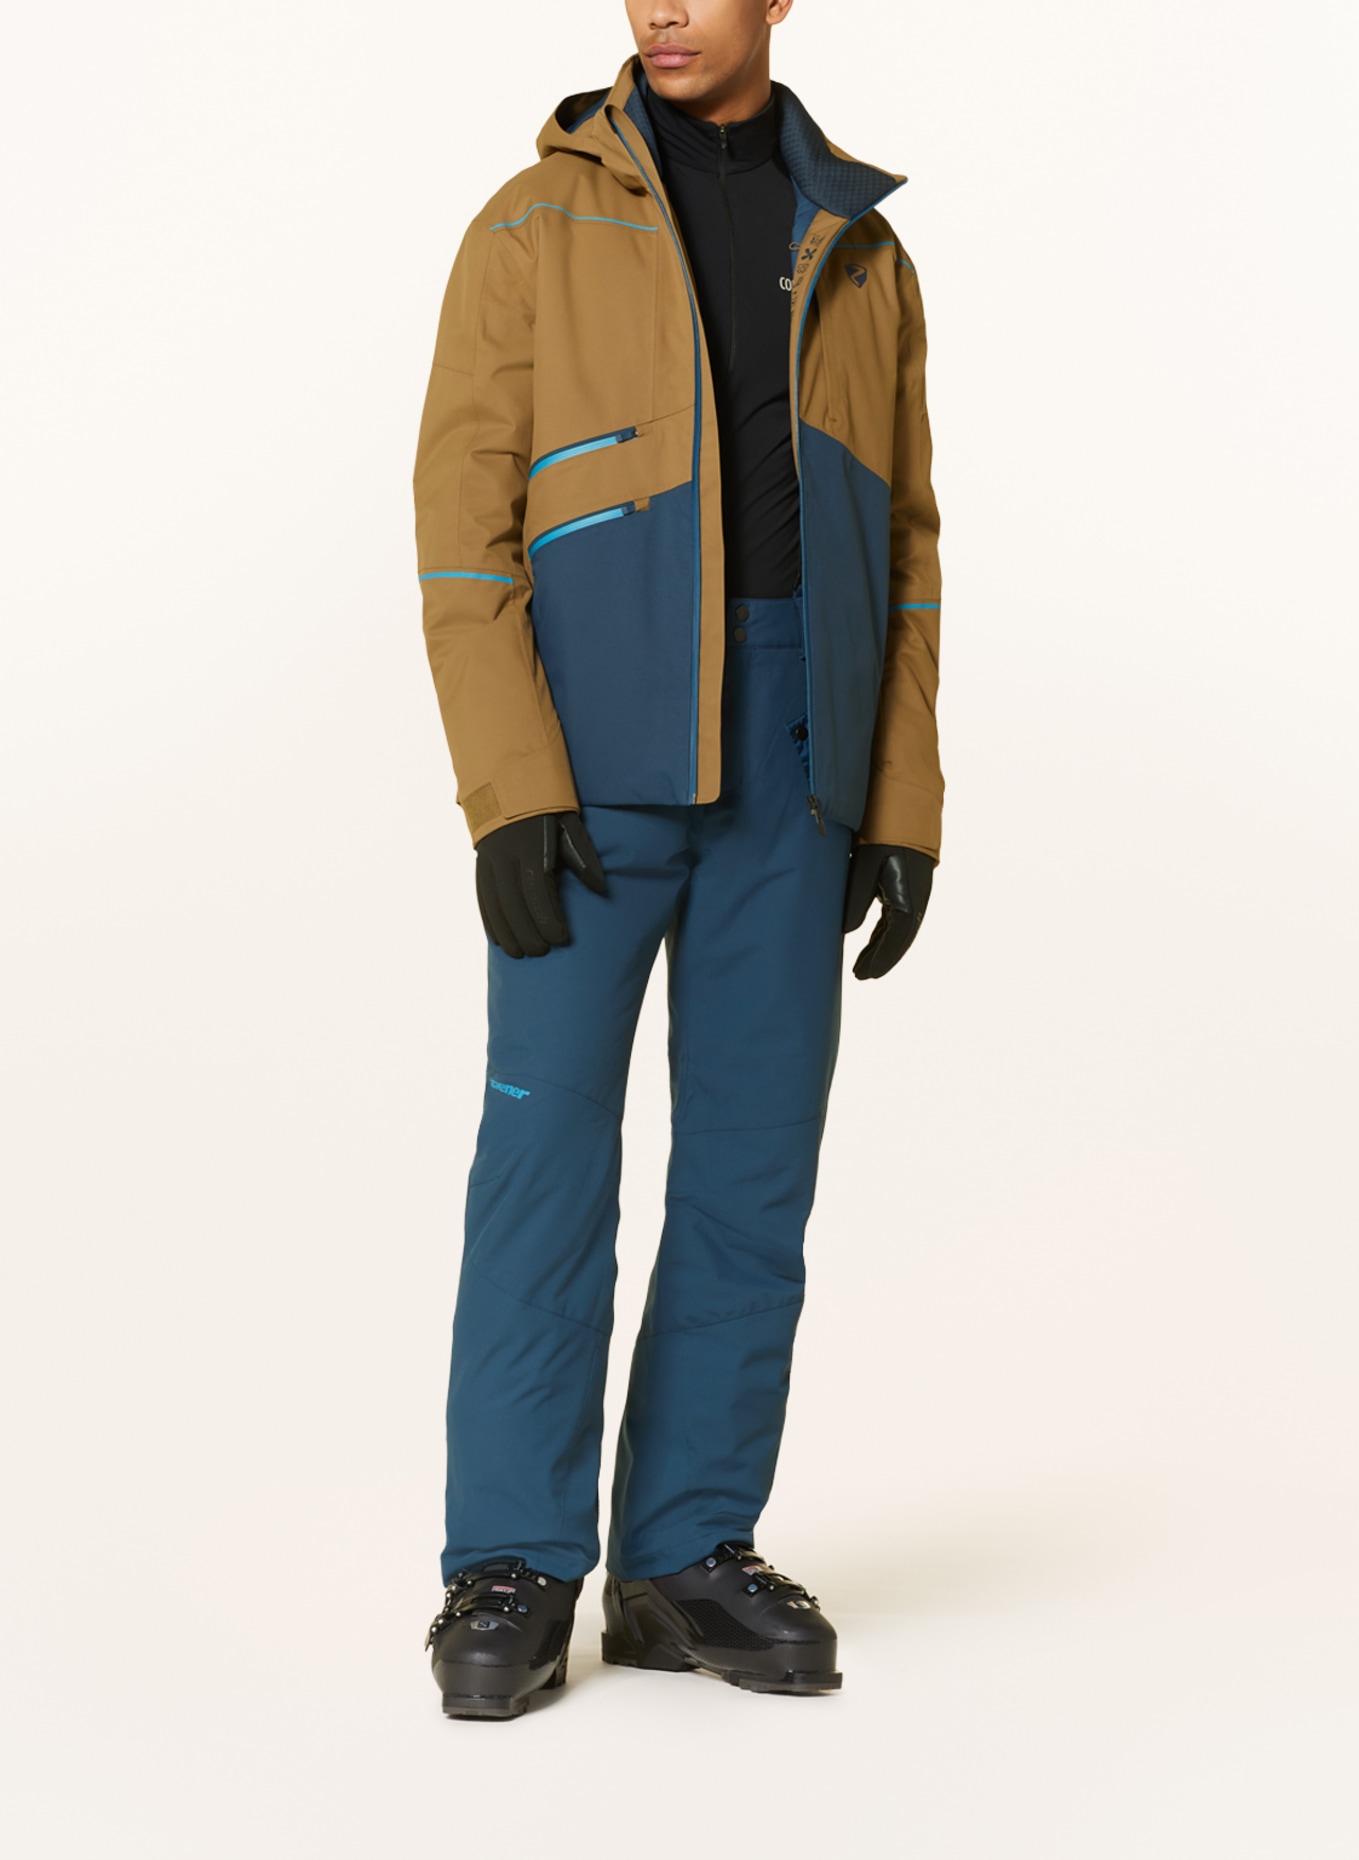 TOACA Ski dark ziener in blue brown/ jacket